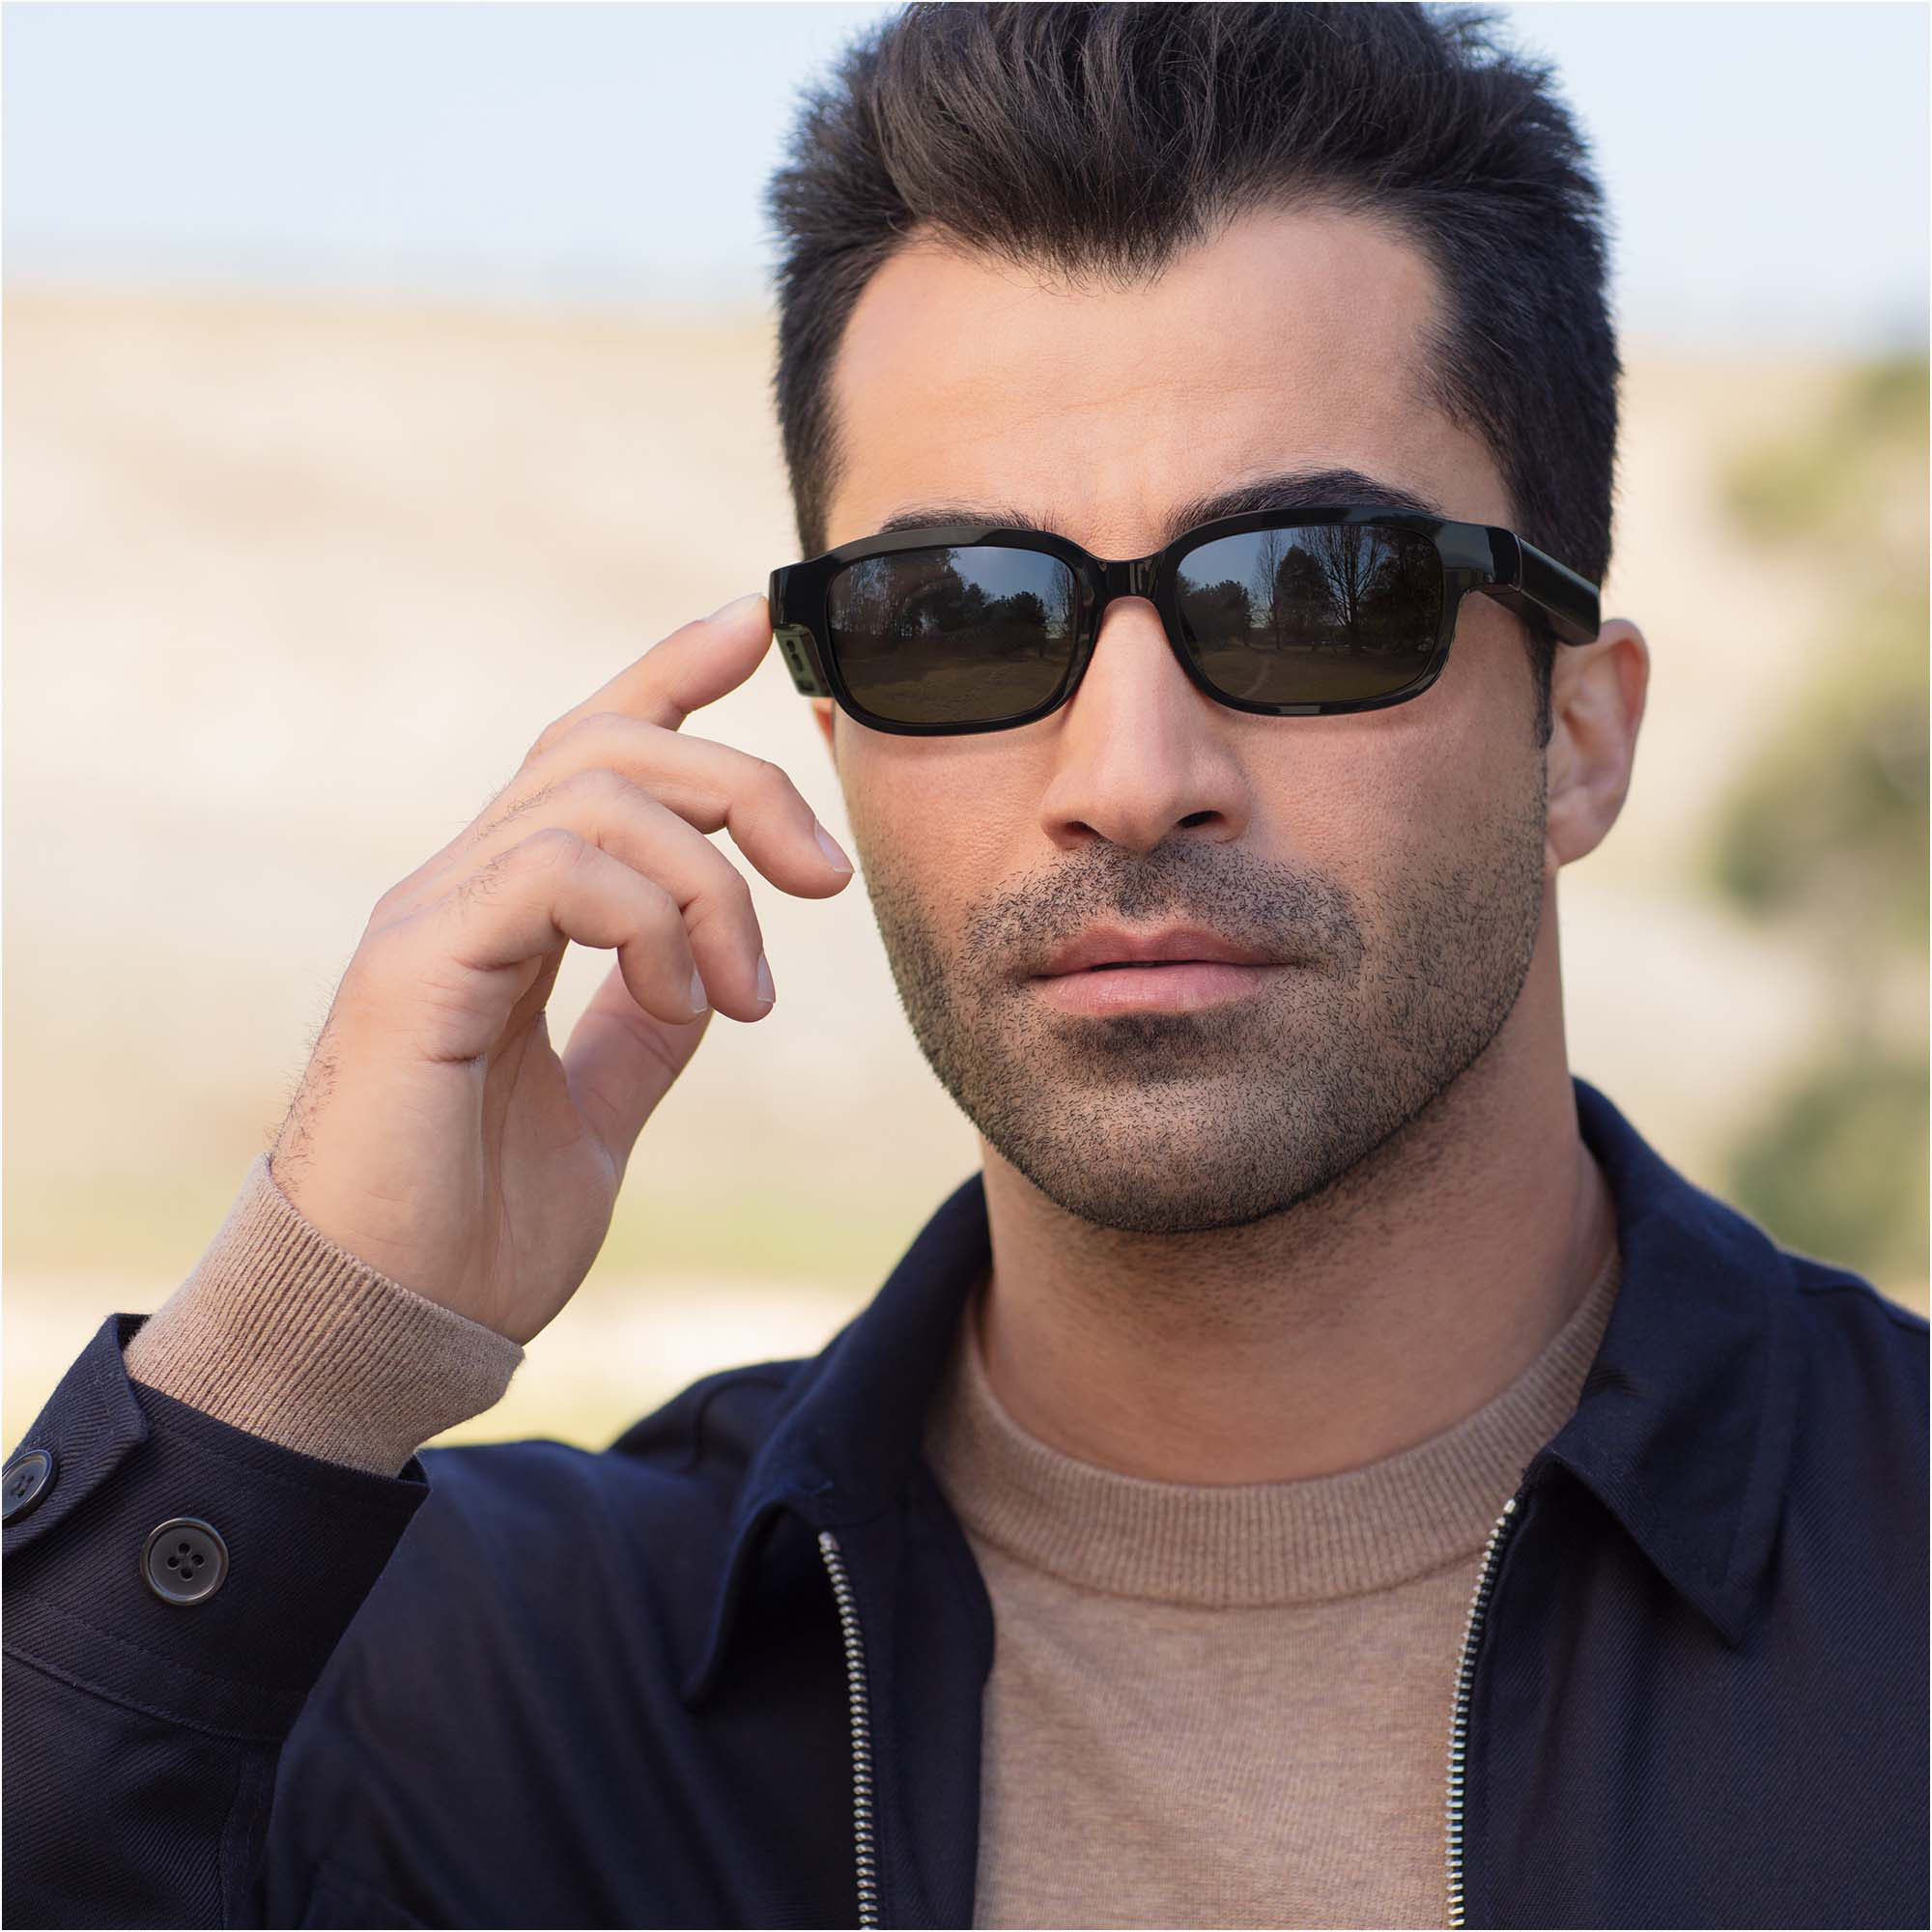 Left View: Amazon - Echo Frames (2nd Gen) | Smart audio sunglasses with Alexa | Classic Black with polarized sunglass lenses - Black